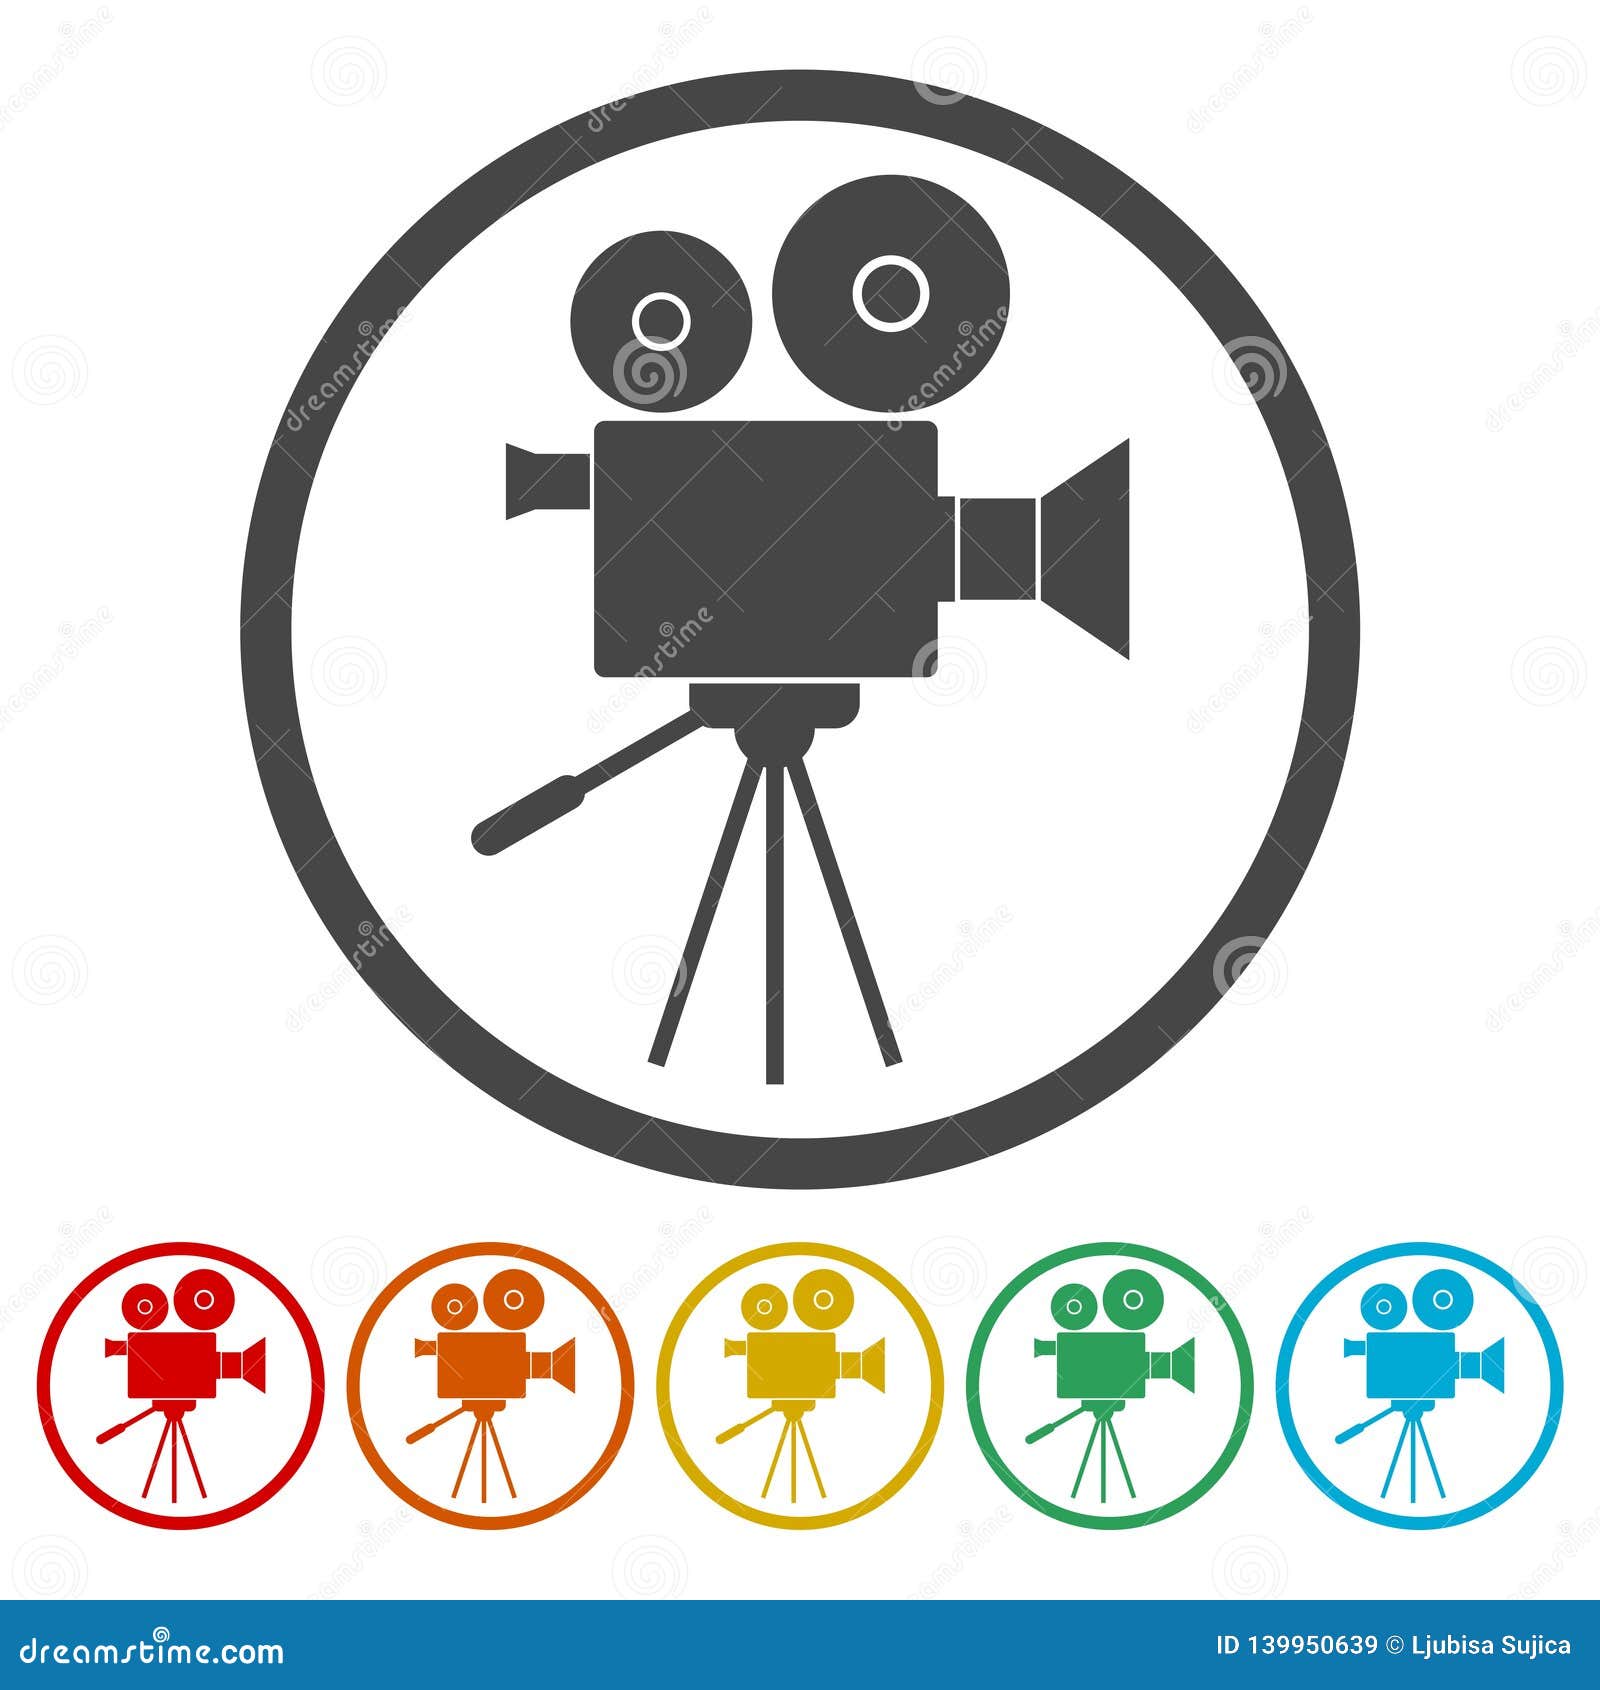 httpsvideo camera film camera icons set video camera film camera icons set vector icon image139950639